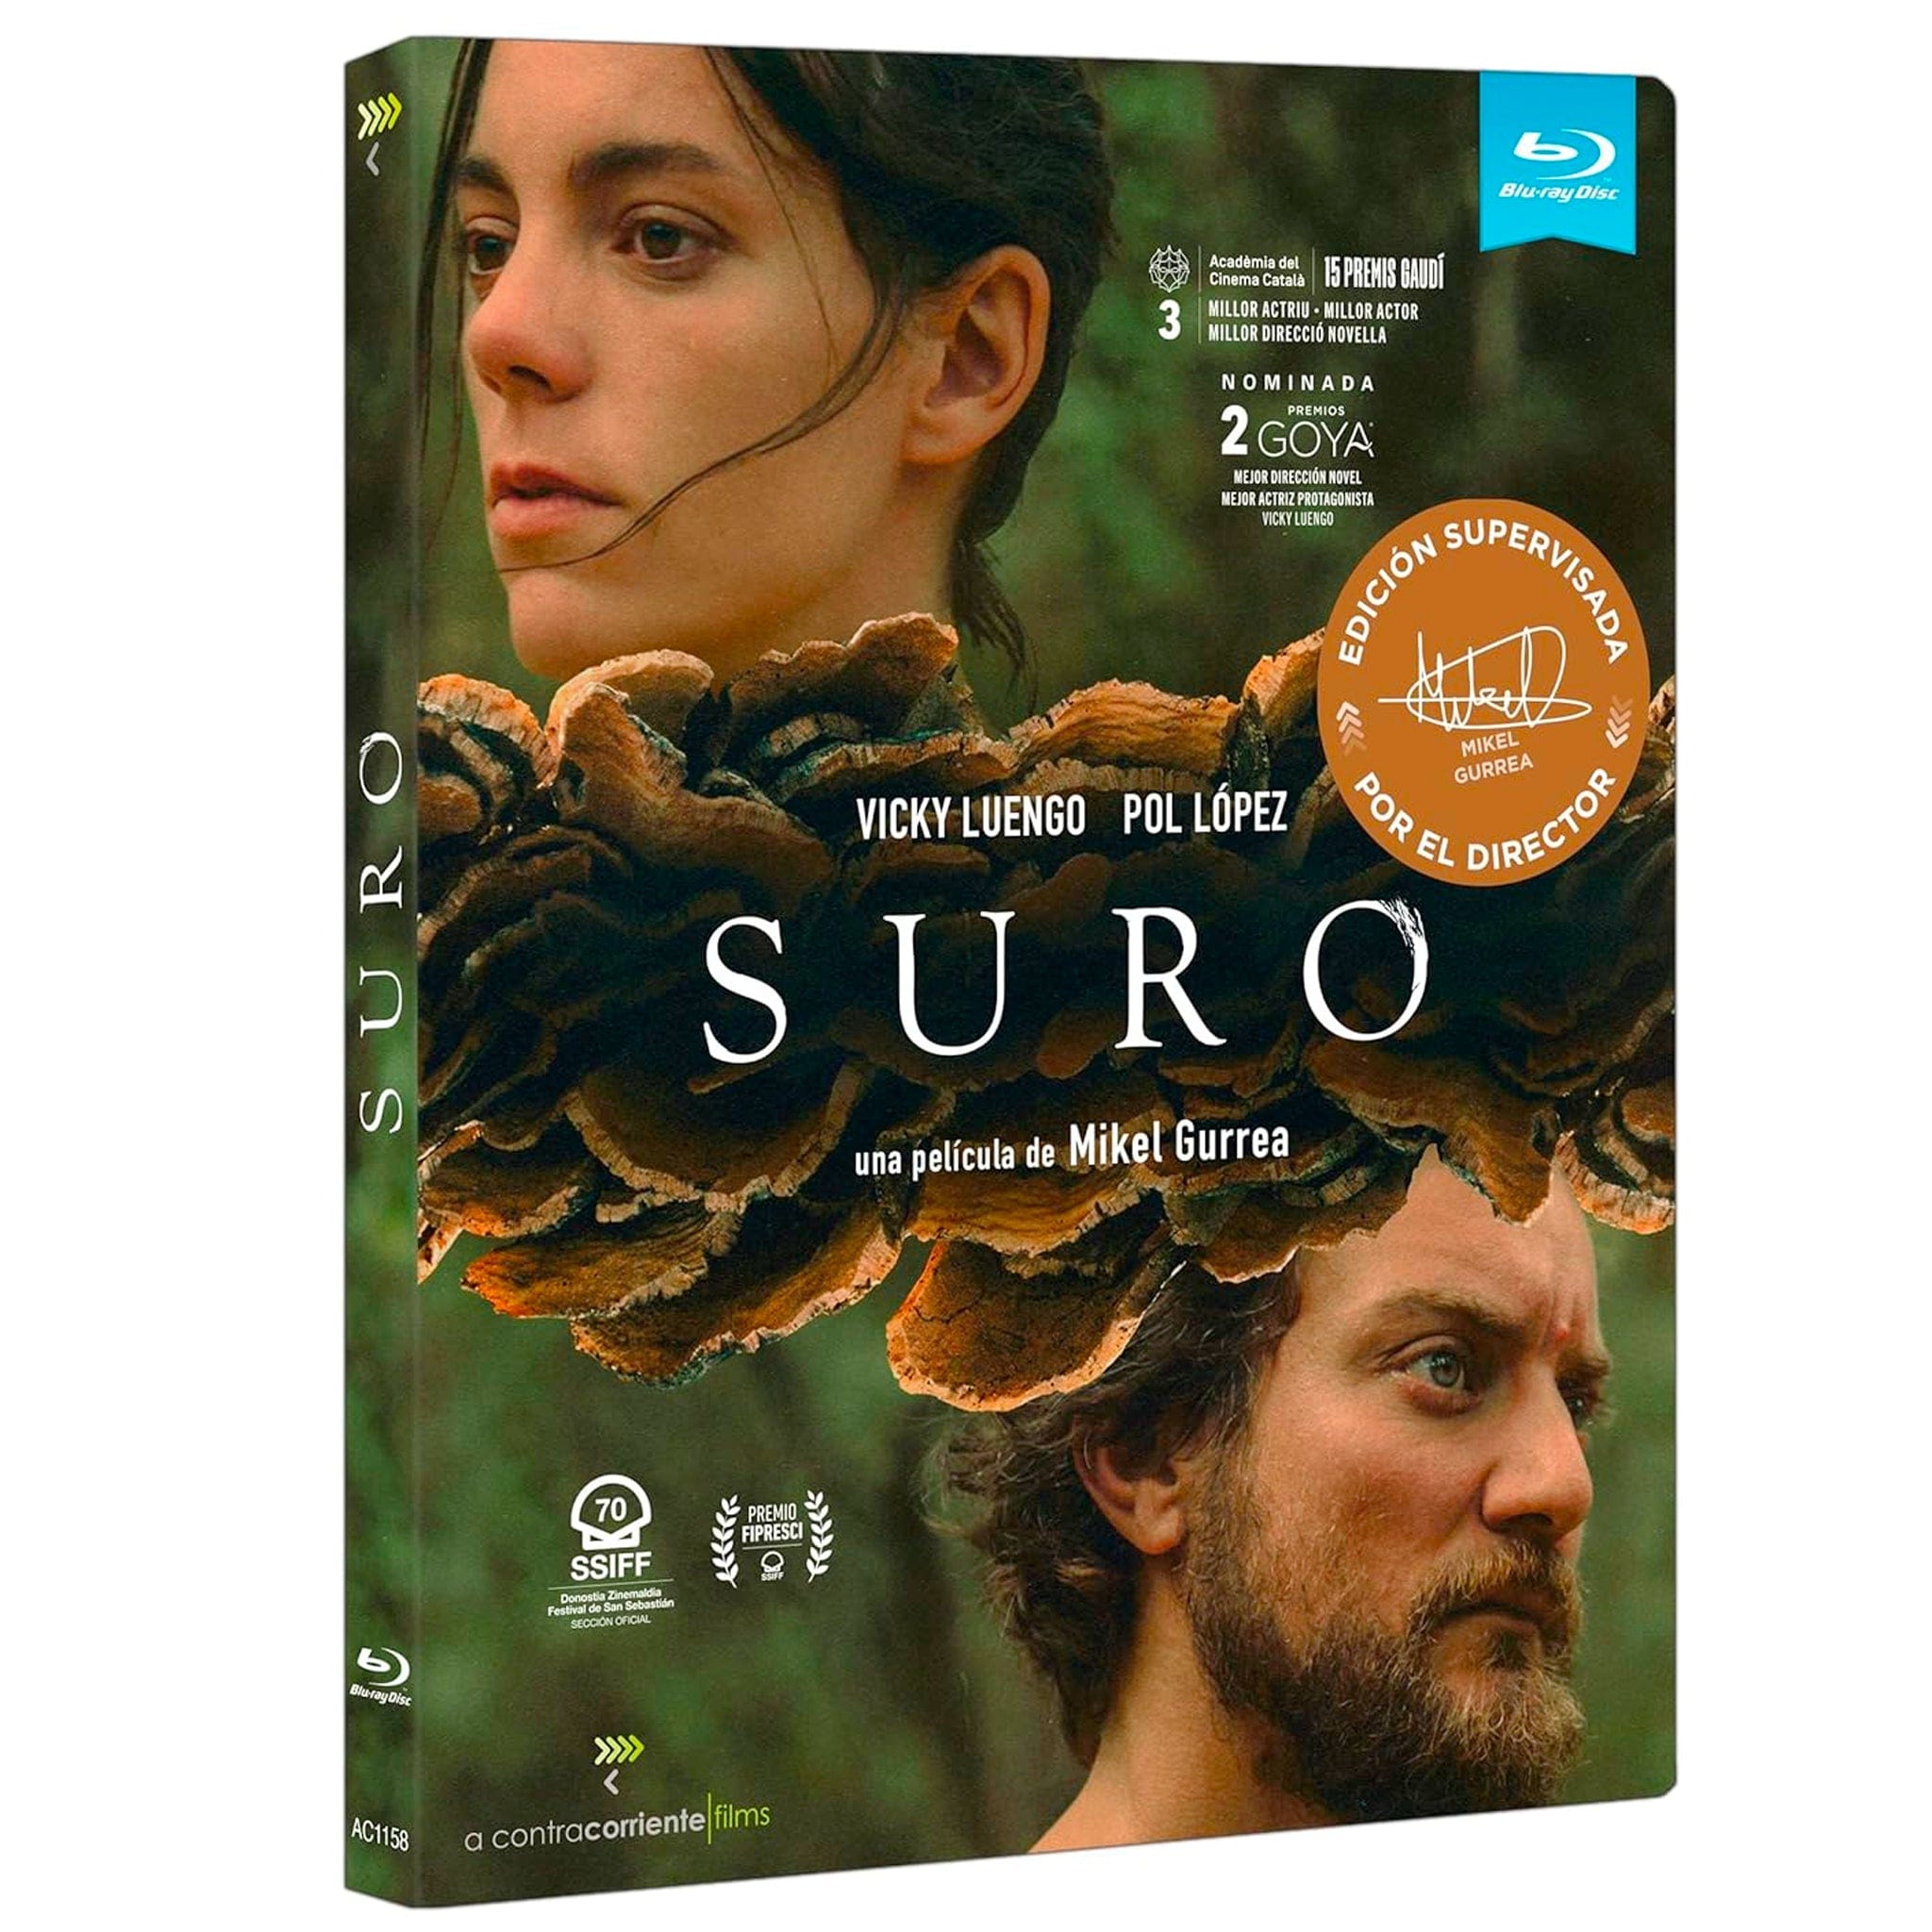 Suro Blu-Ray - Universe of Entertainment